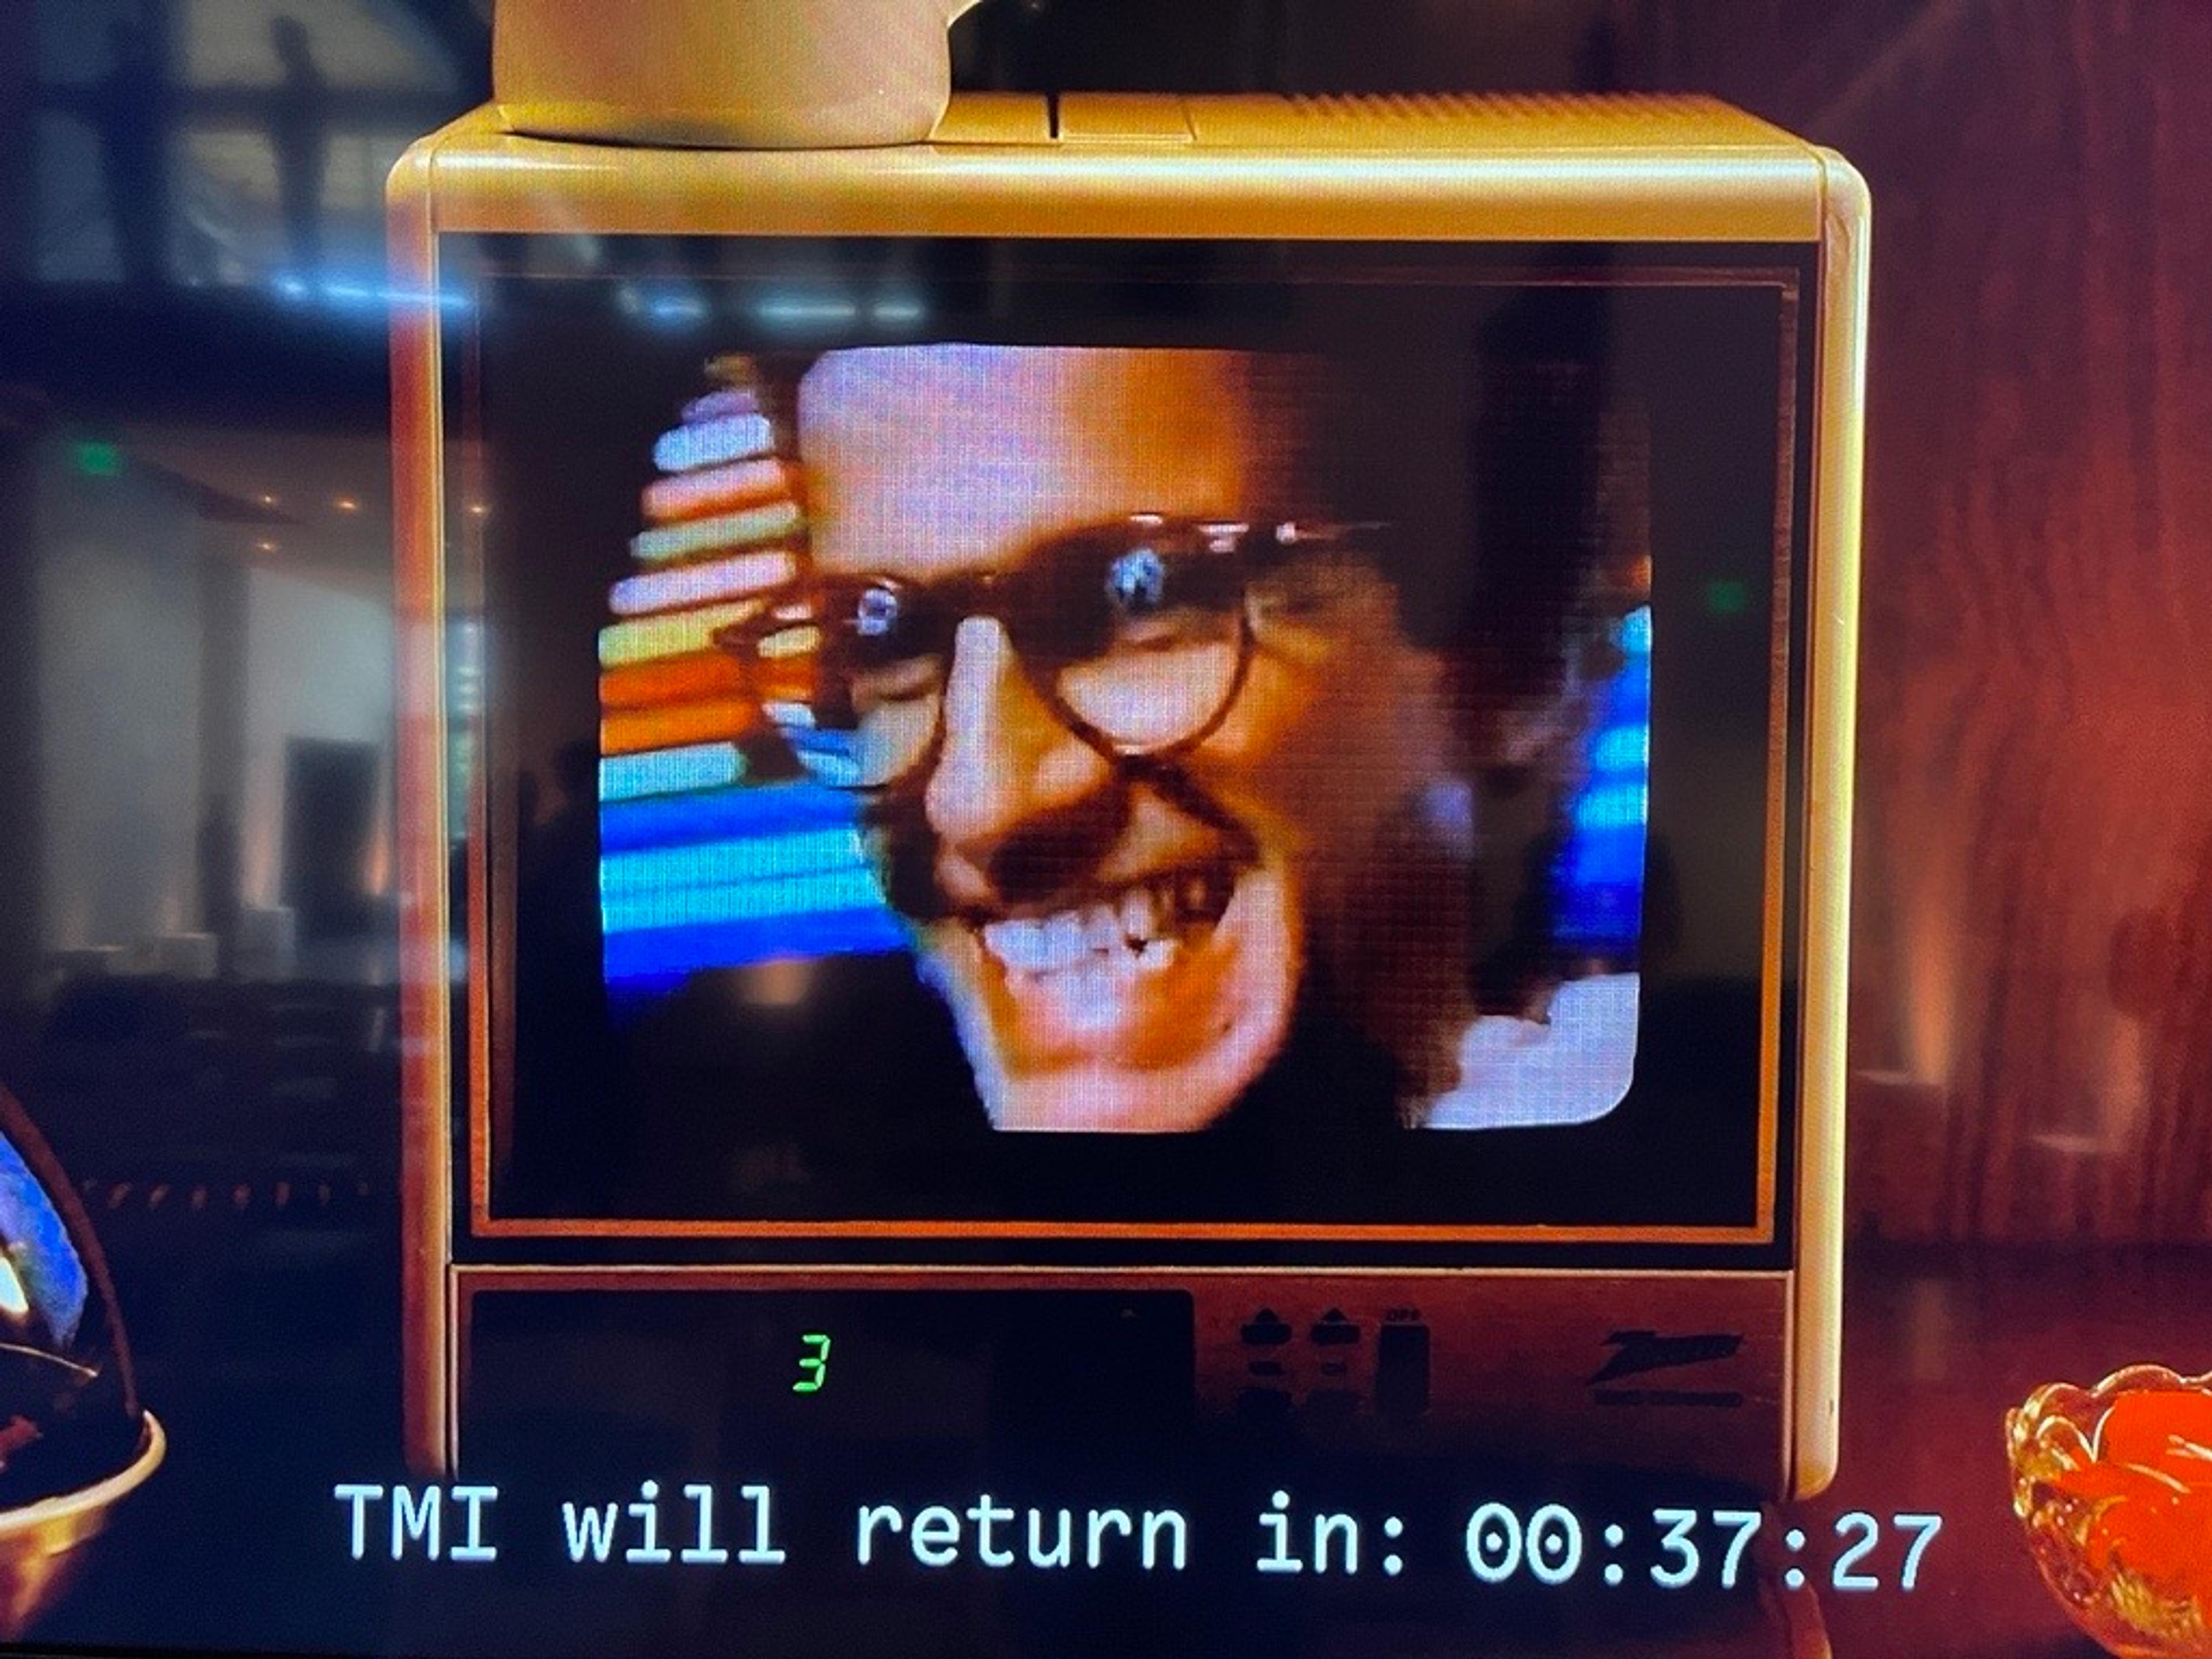 Retro television with the caption, "TMI will return in: 00:37:27".